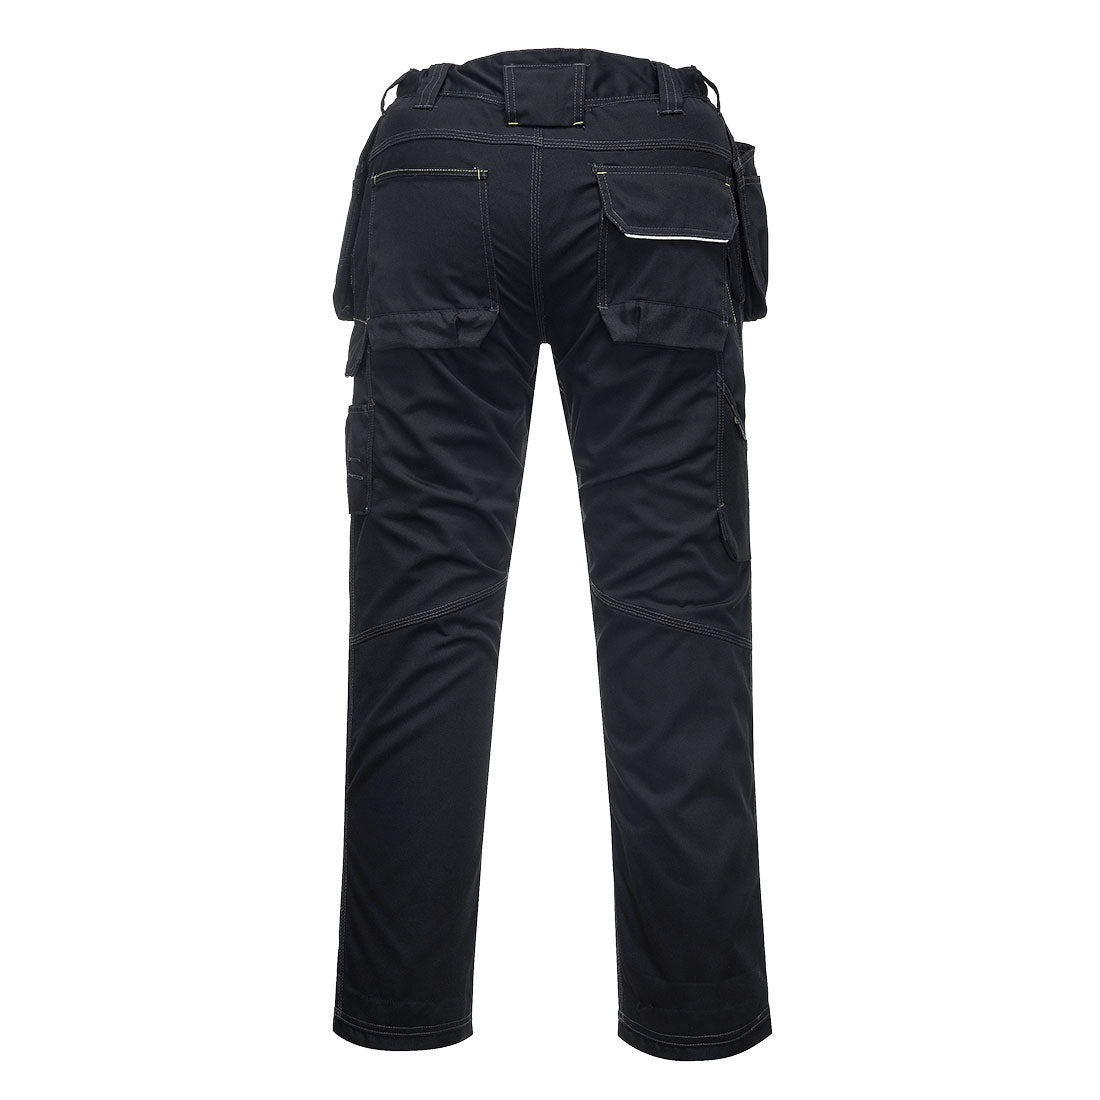 Site Kirksey Grey & black Men's Holster pocket trousers, W34